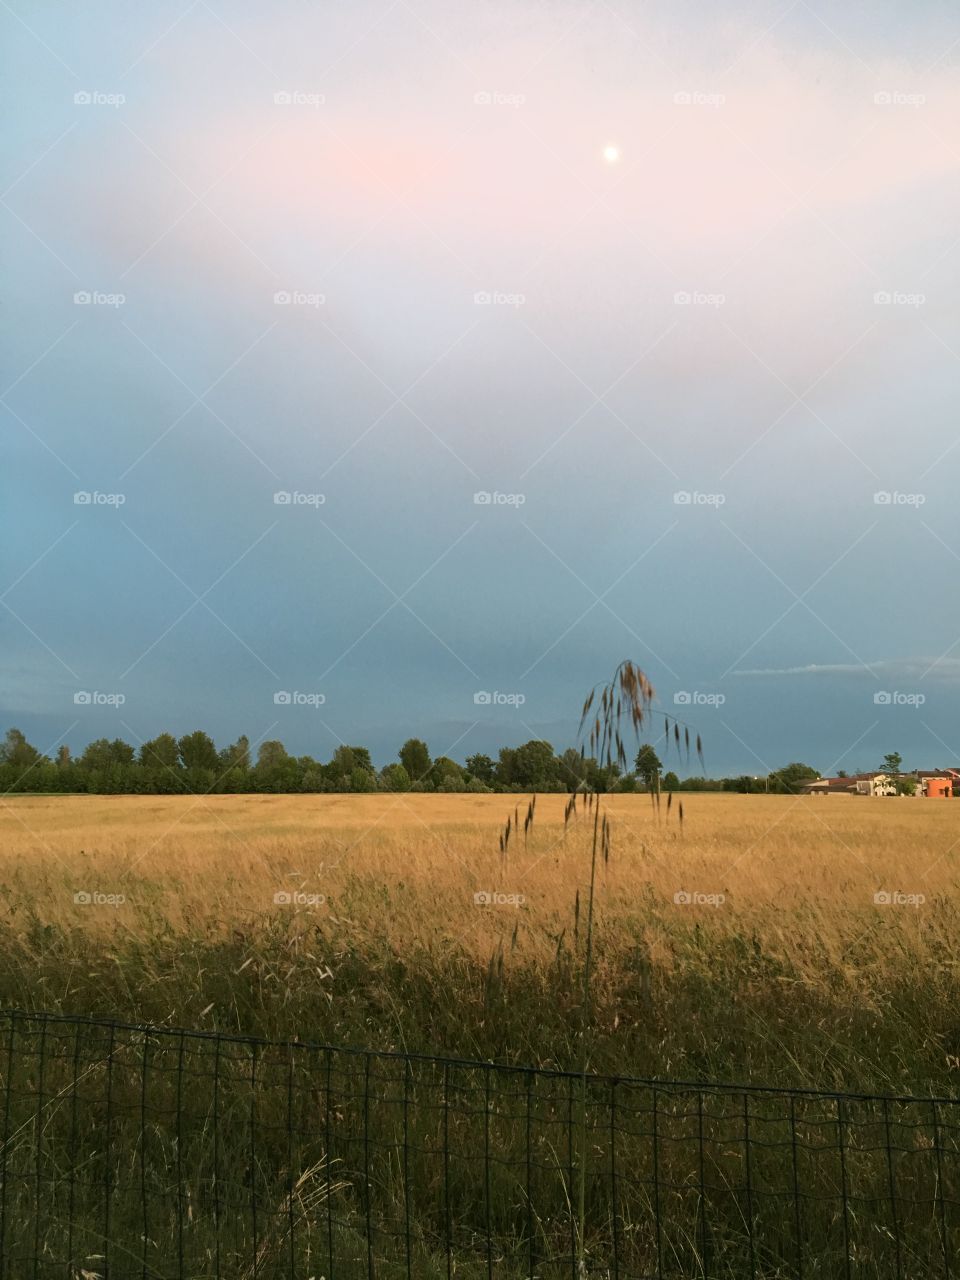 Landscape, Agriculture, Farm, Field, Sky